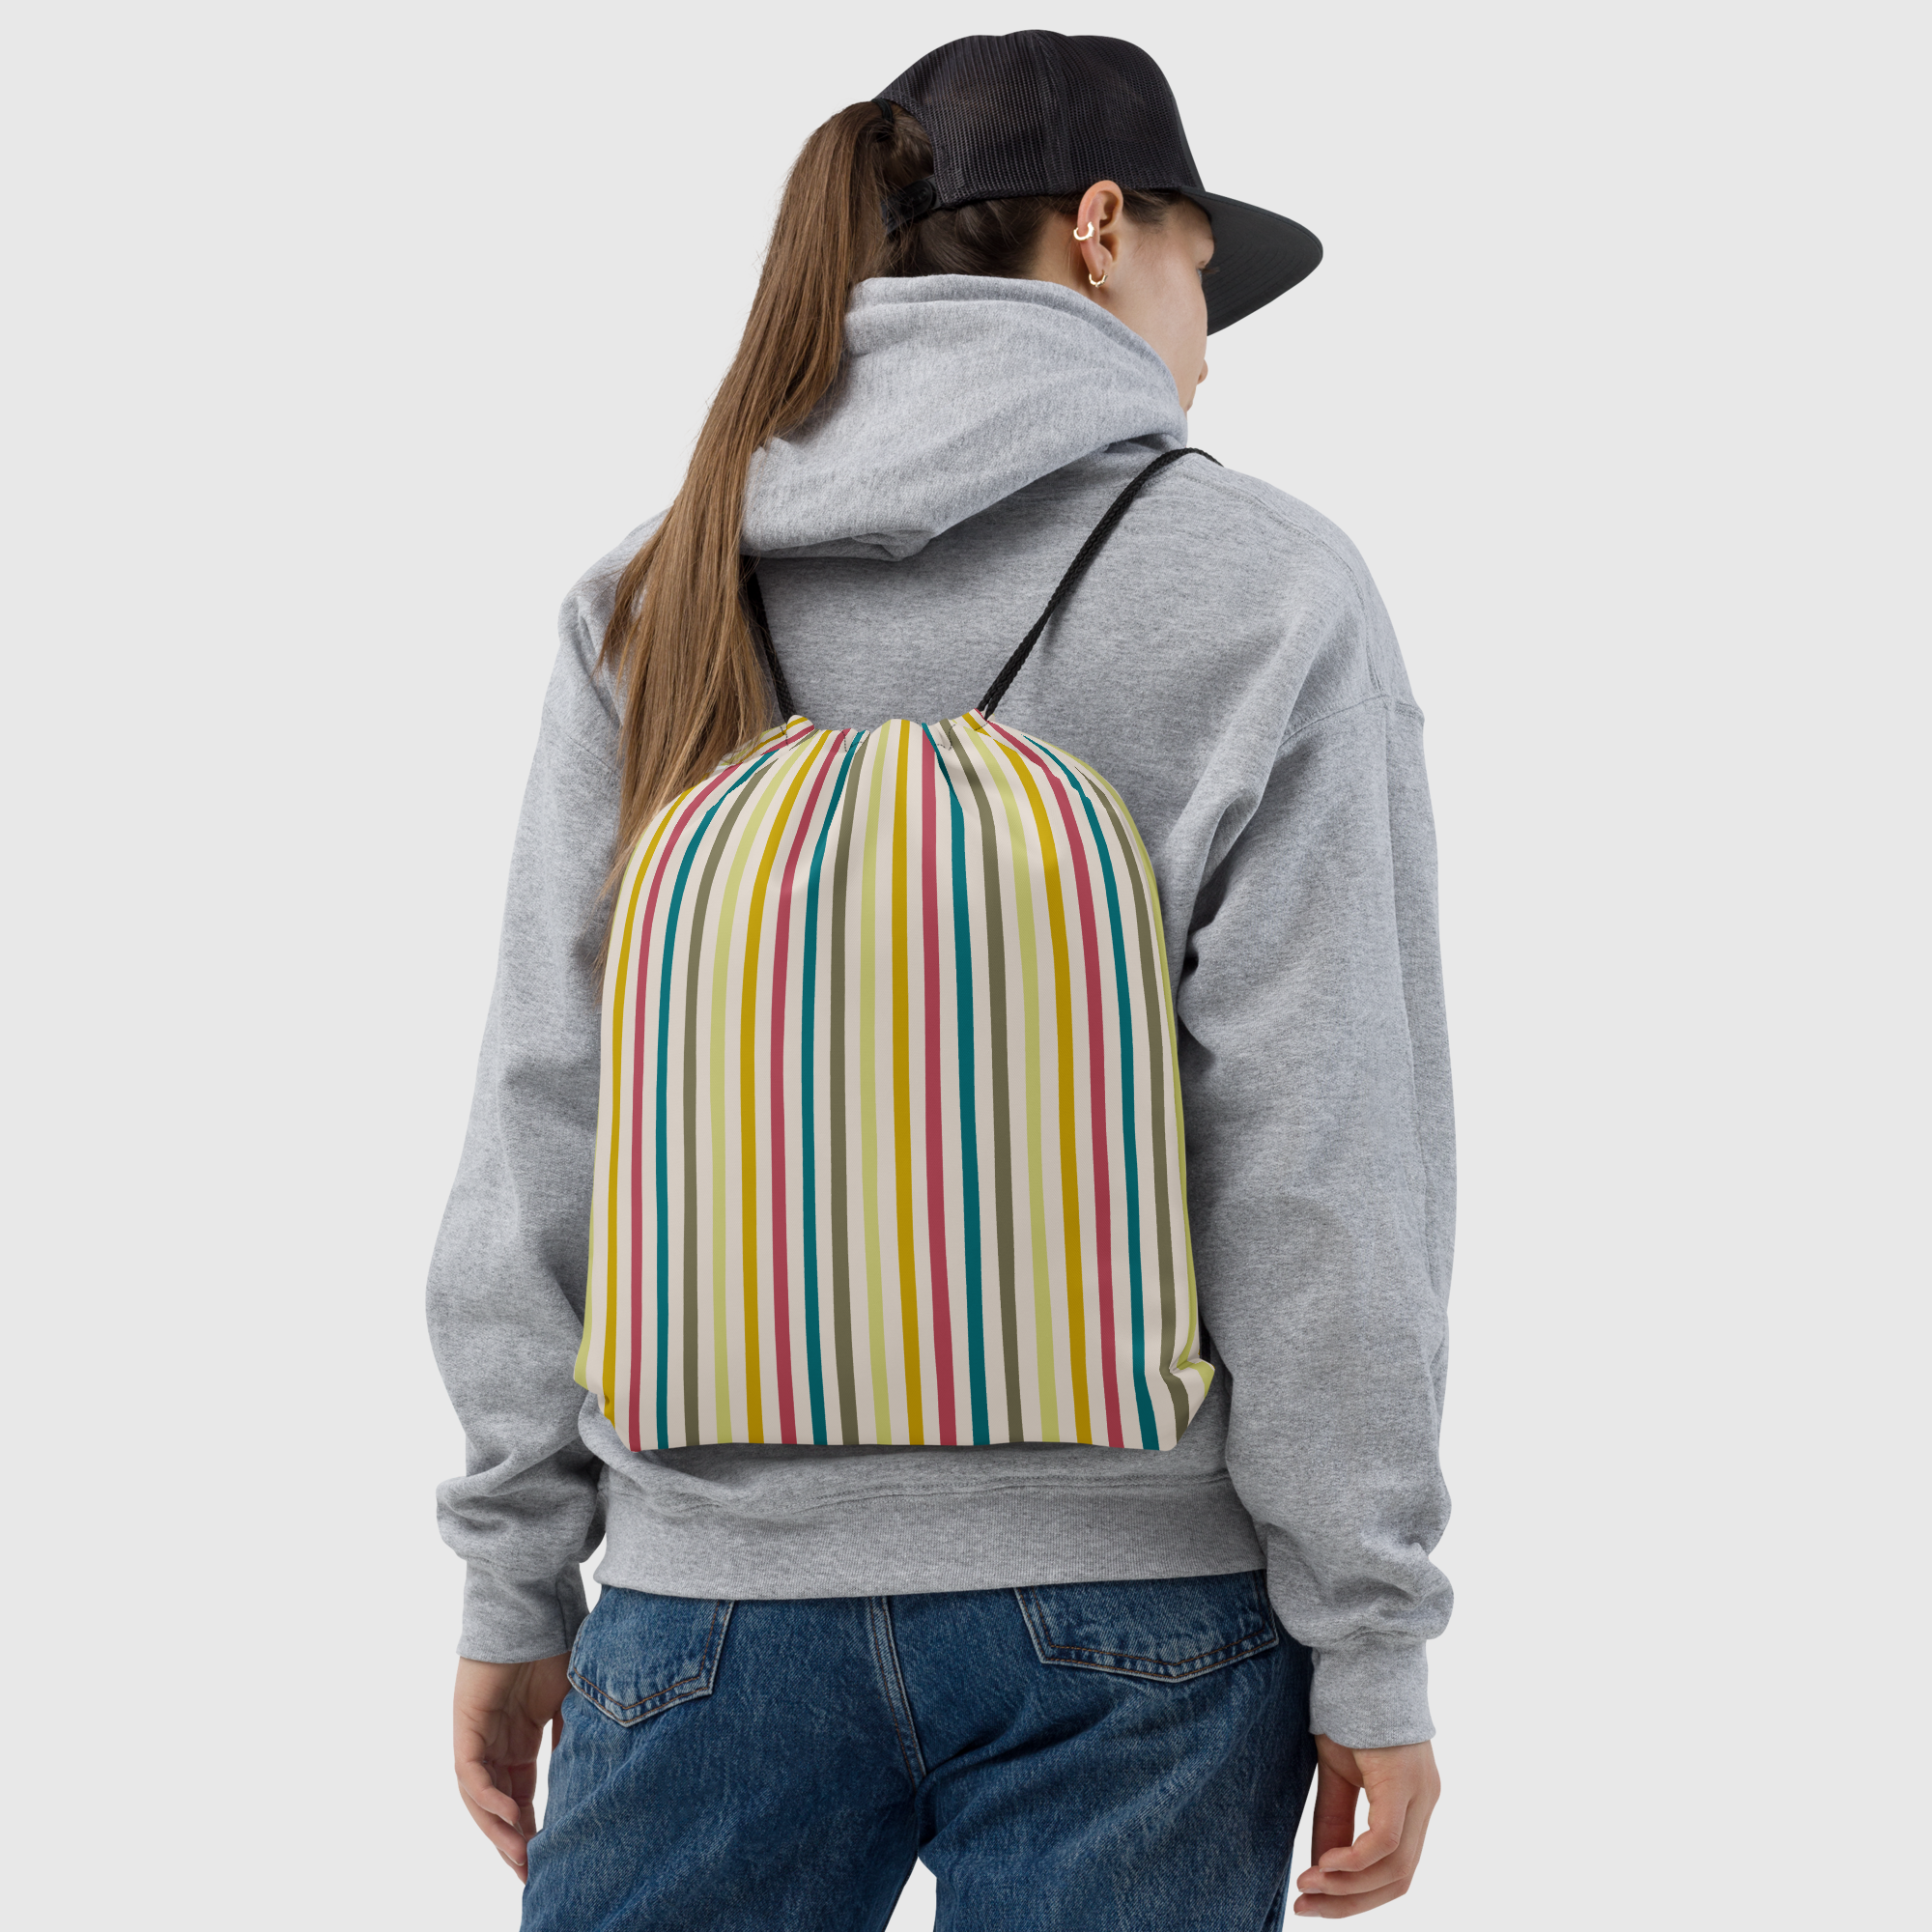 Drawstring bag - Stripes